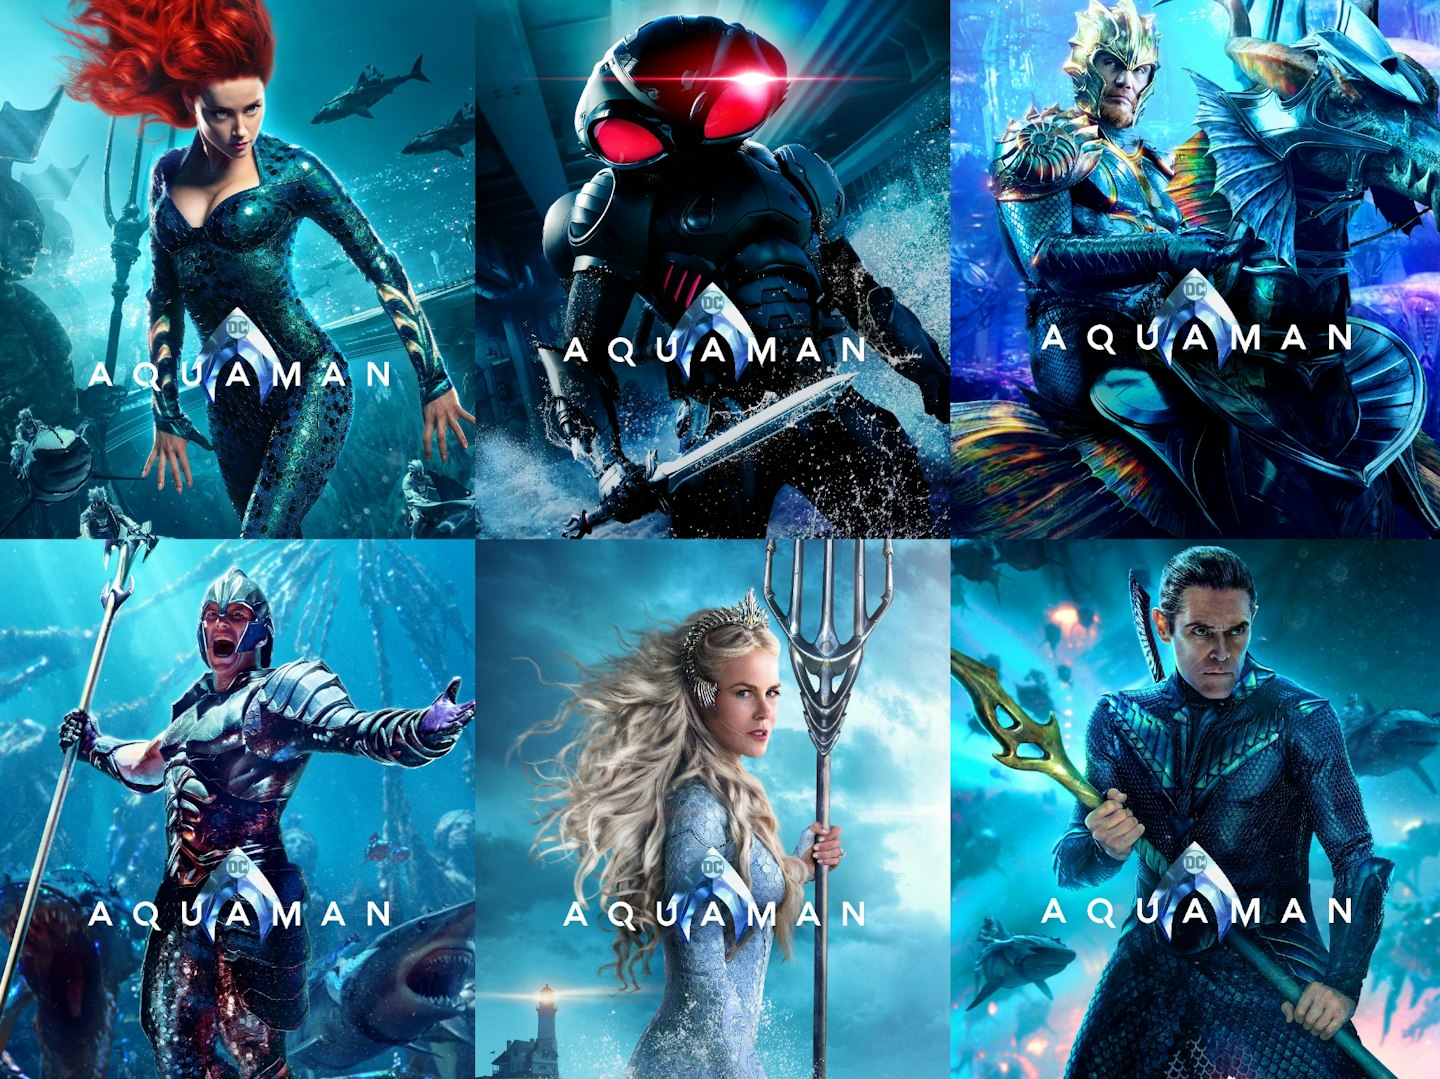 Aquaman character posters